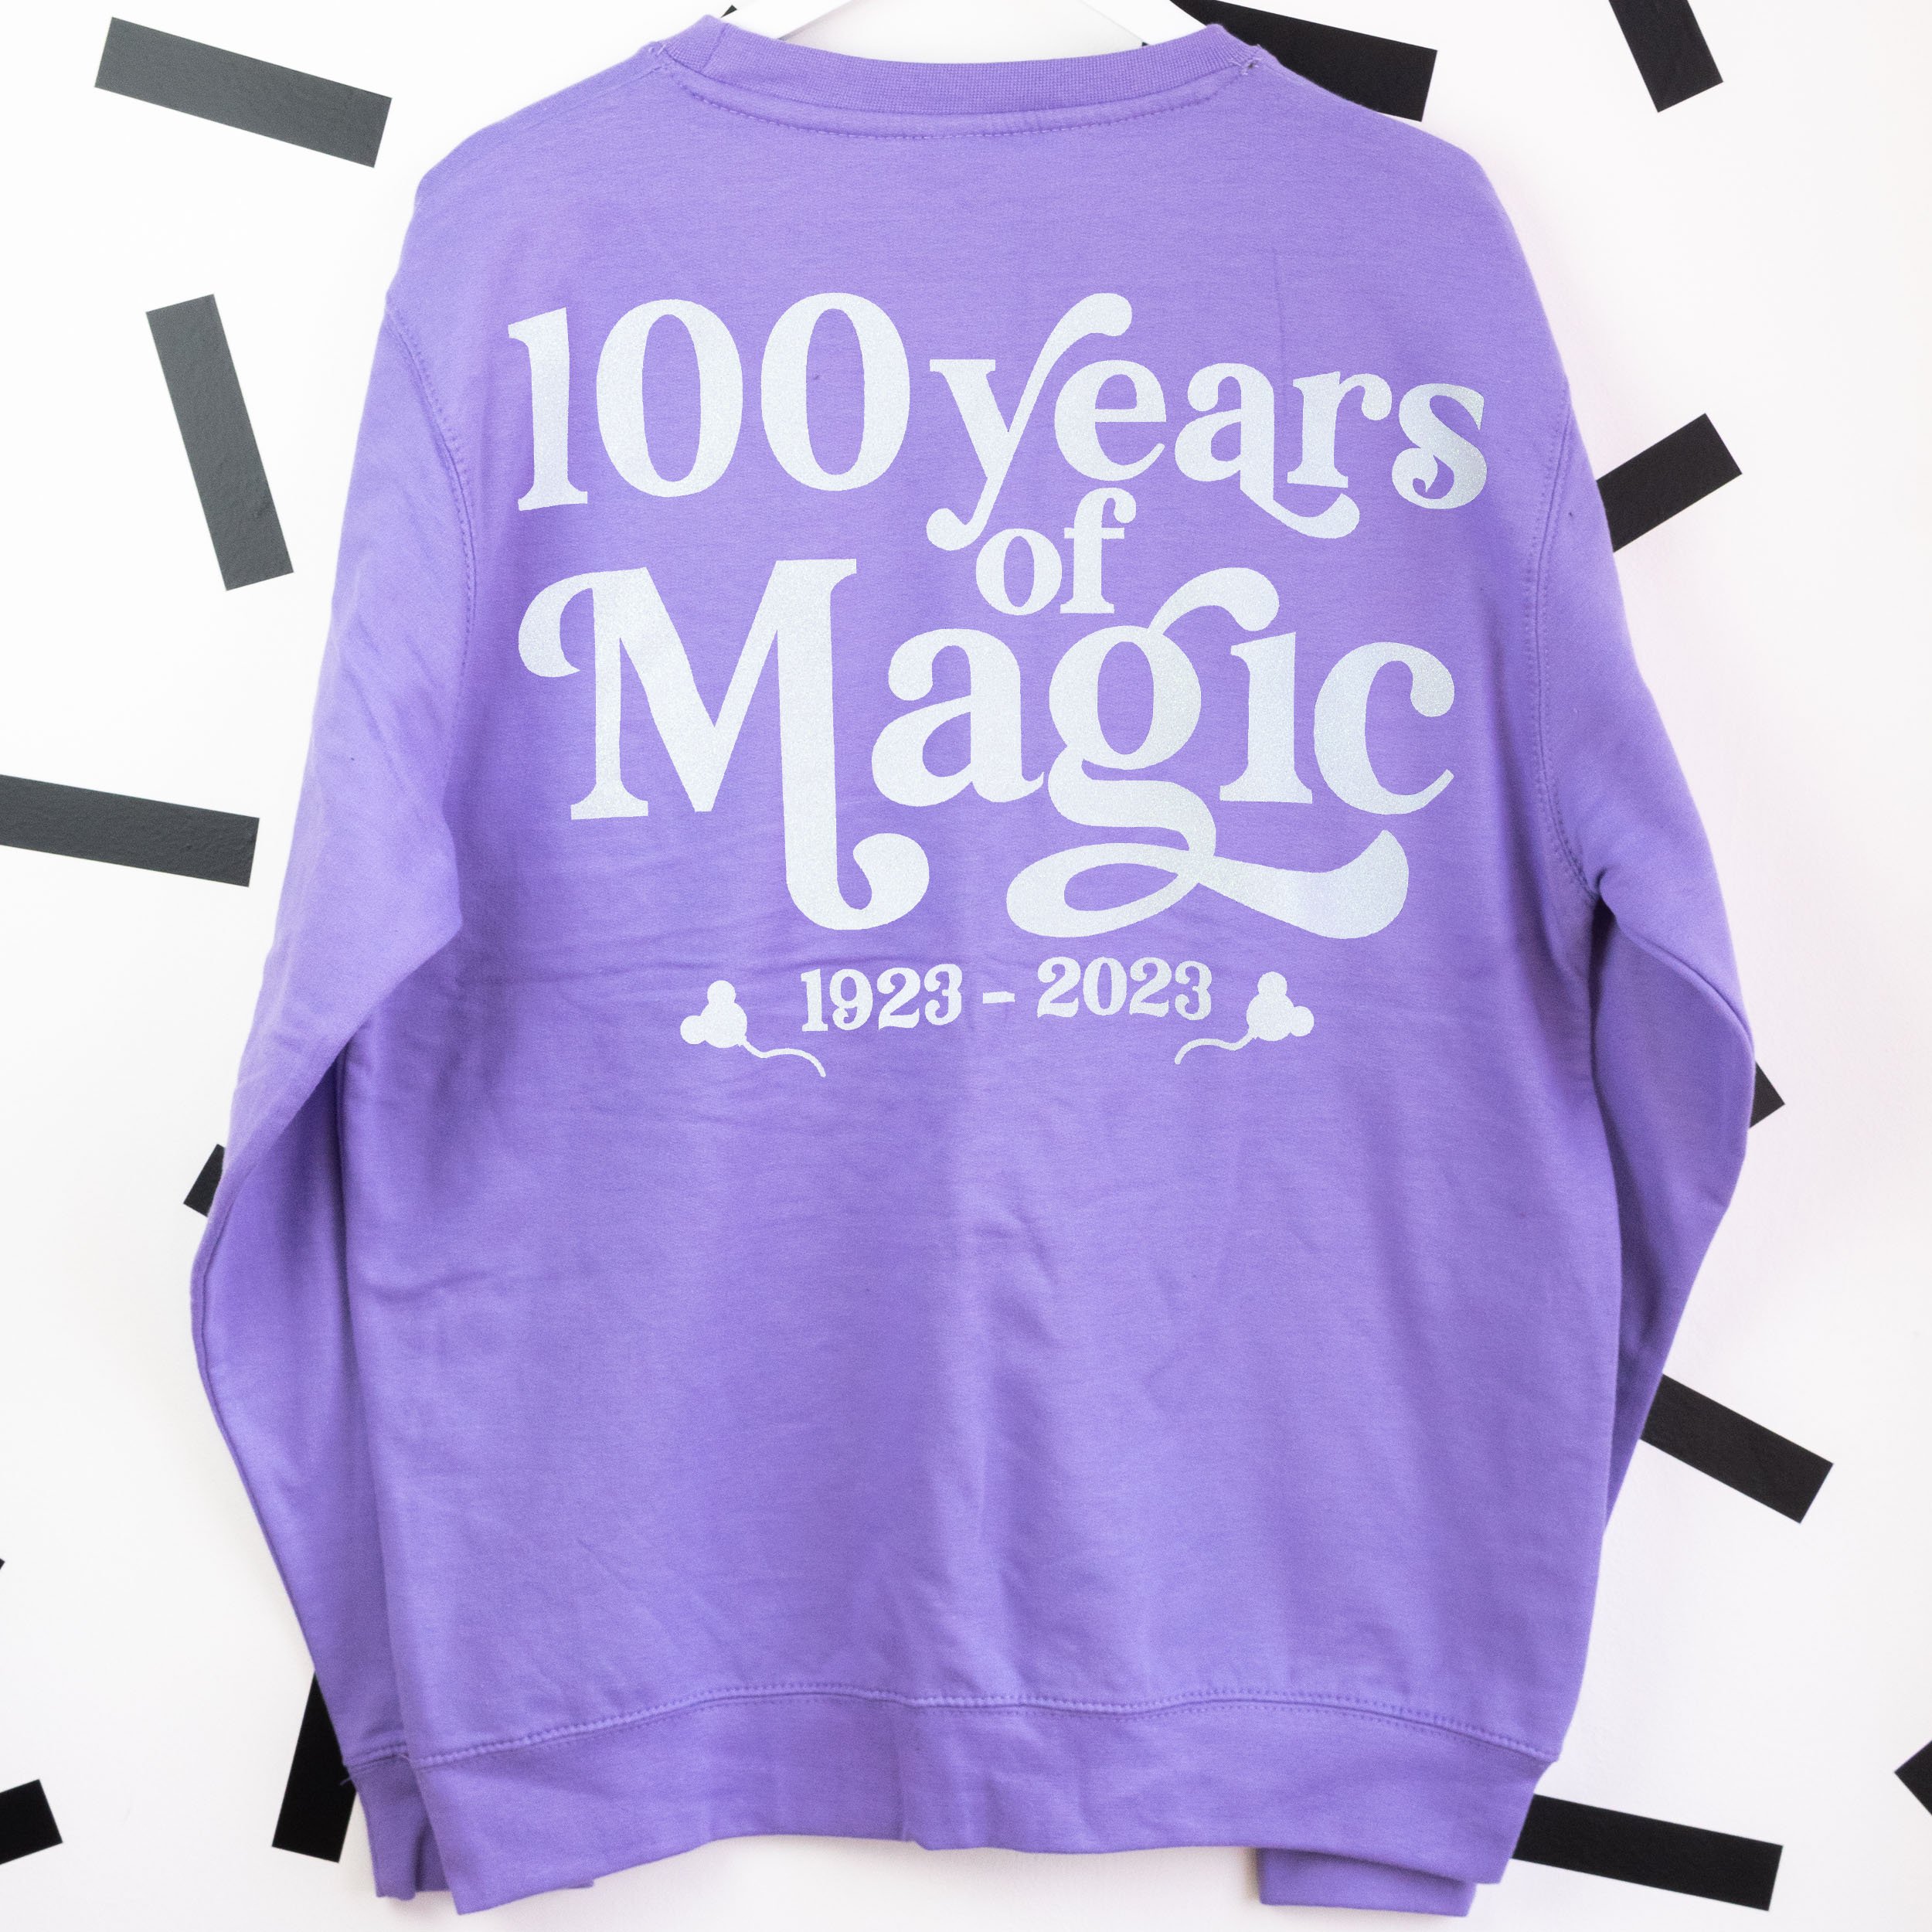 100 Years of Magic Jumper - Purple 2.jpg